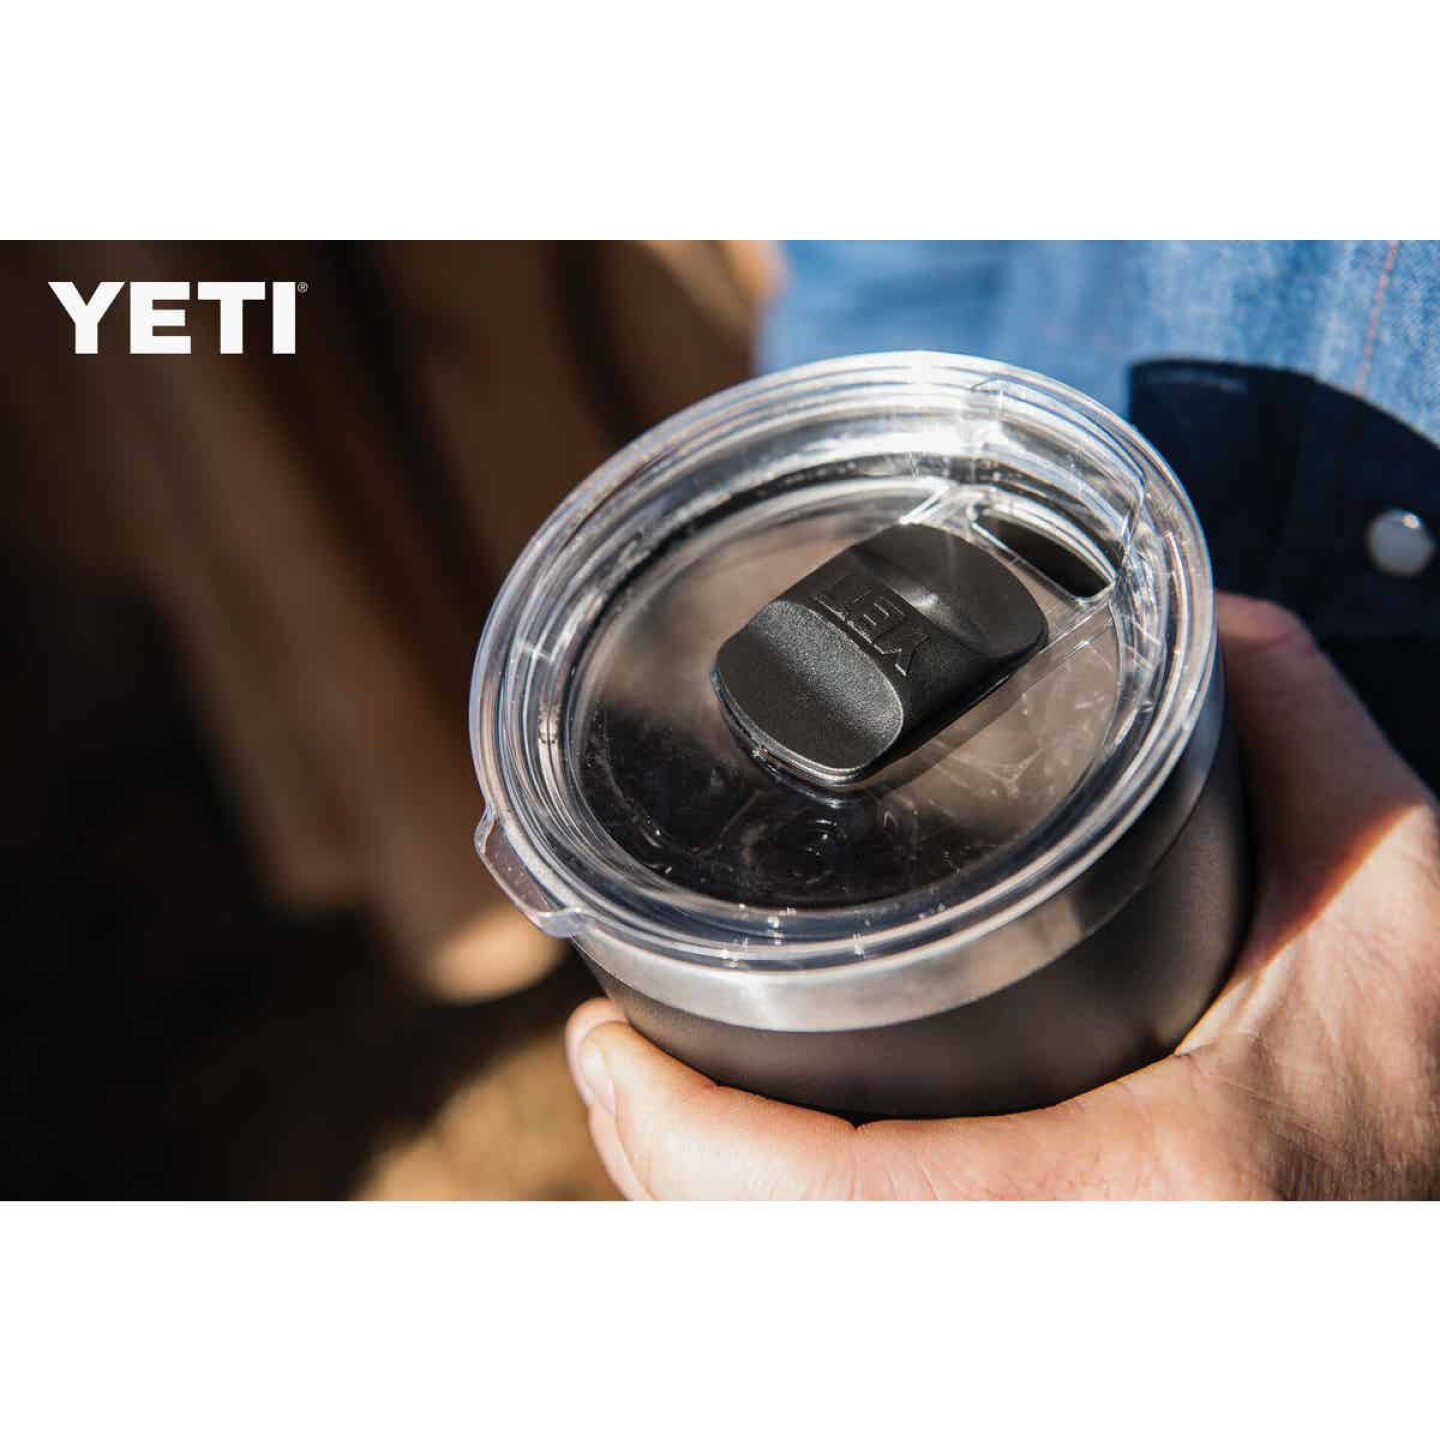 YETI Rambler 20-fl oz Stainless Steel Tumbler with MagSlider Lid, Black at